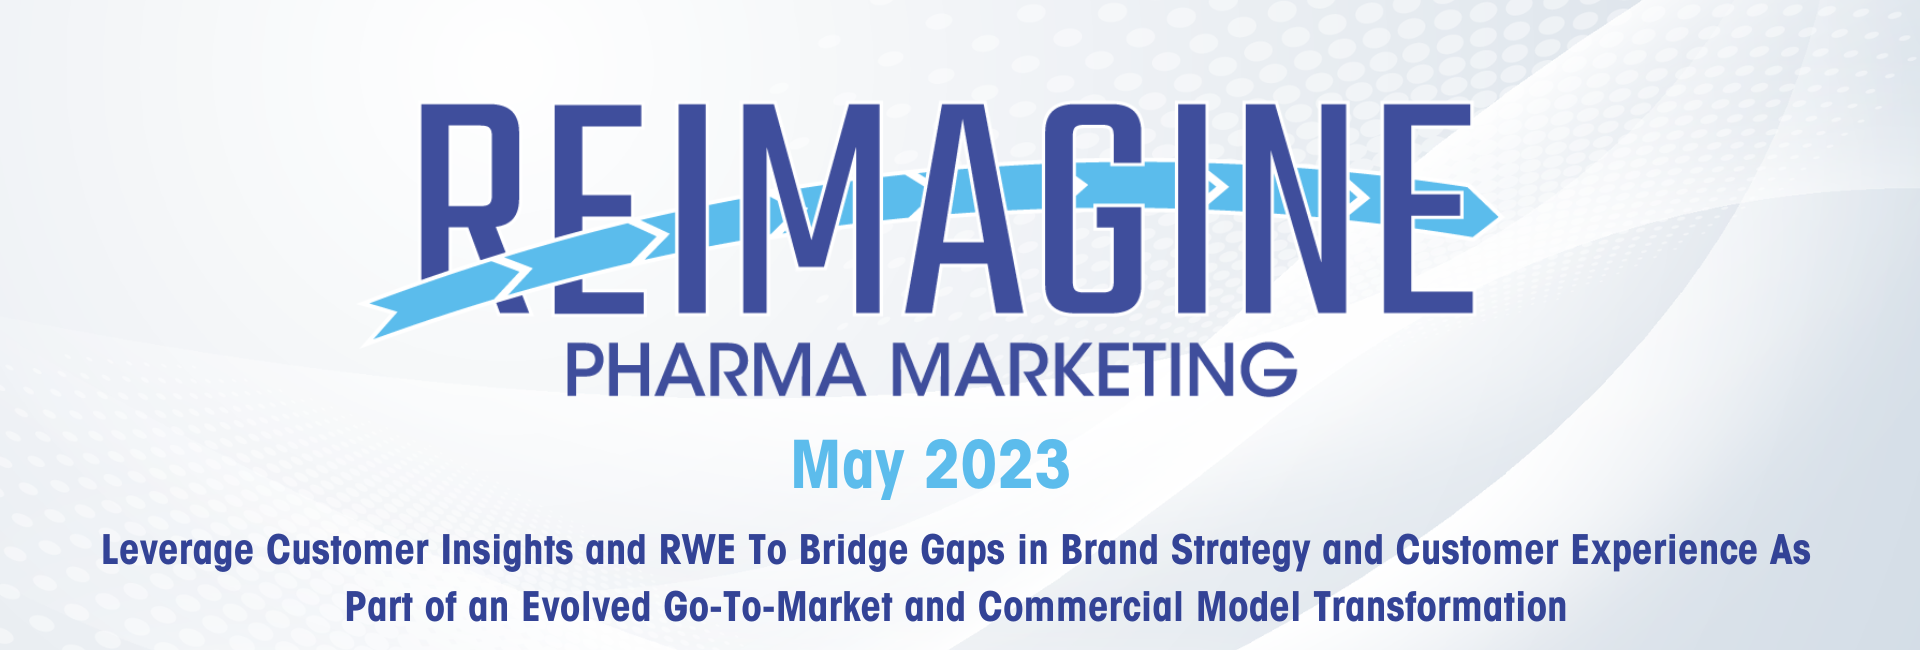 Logo for ReImagine Pharma Marketing